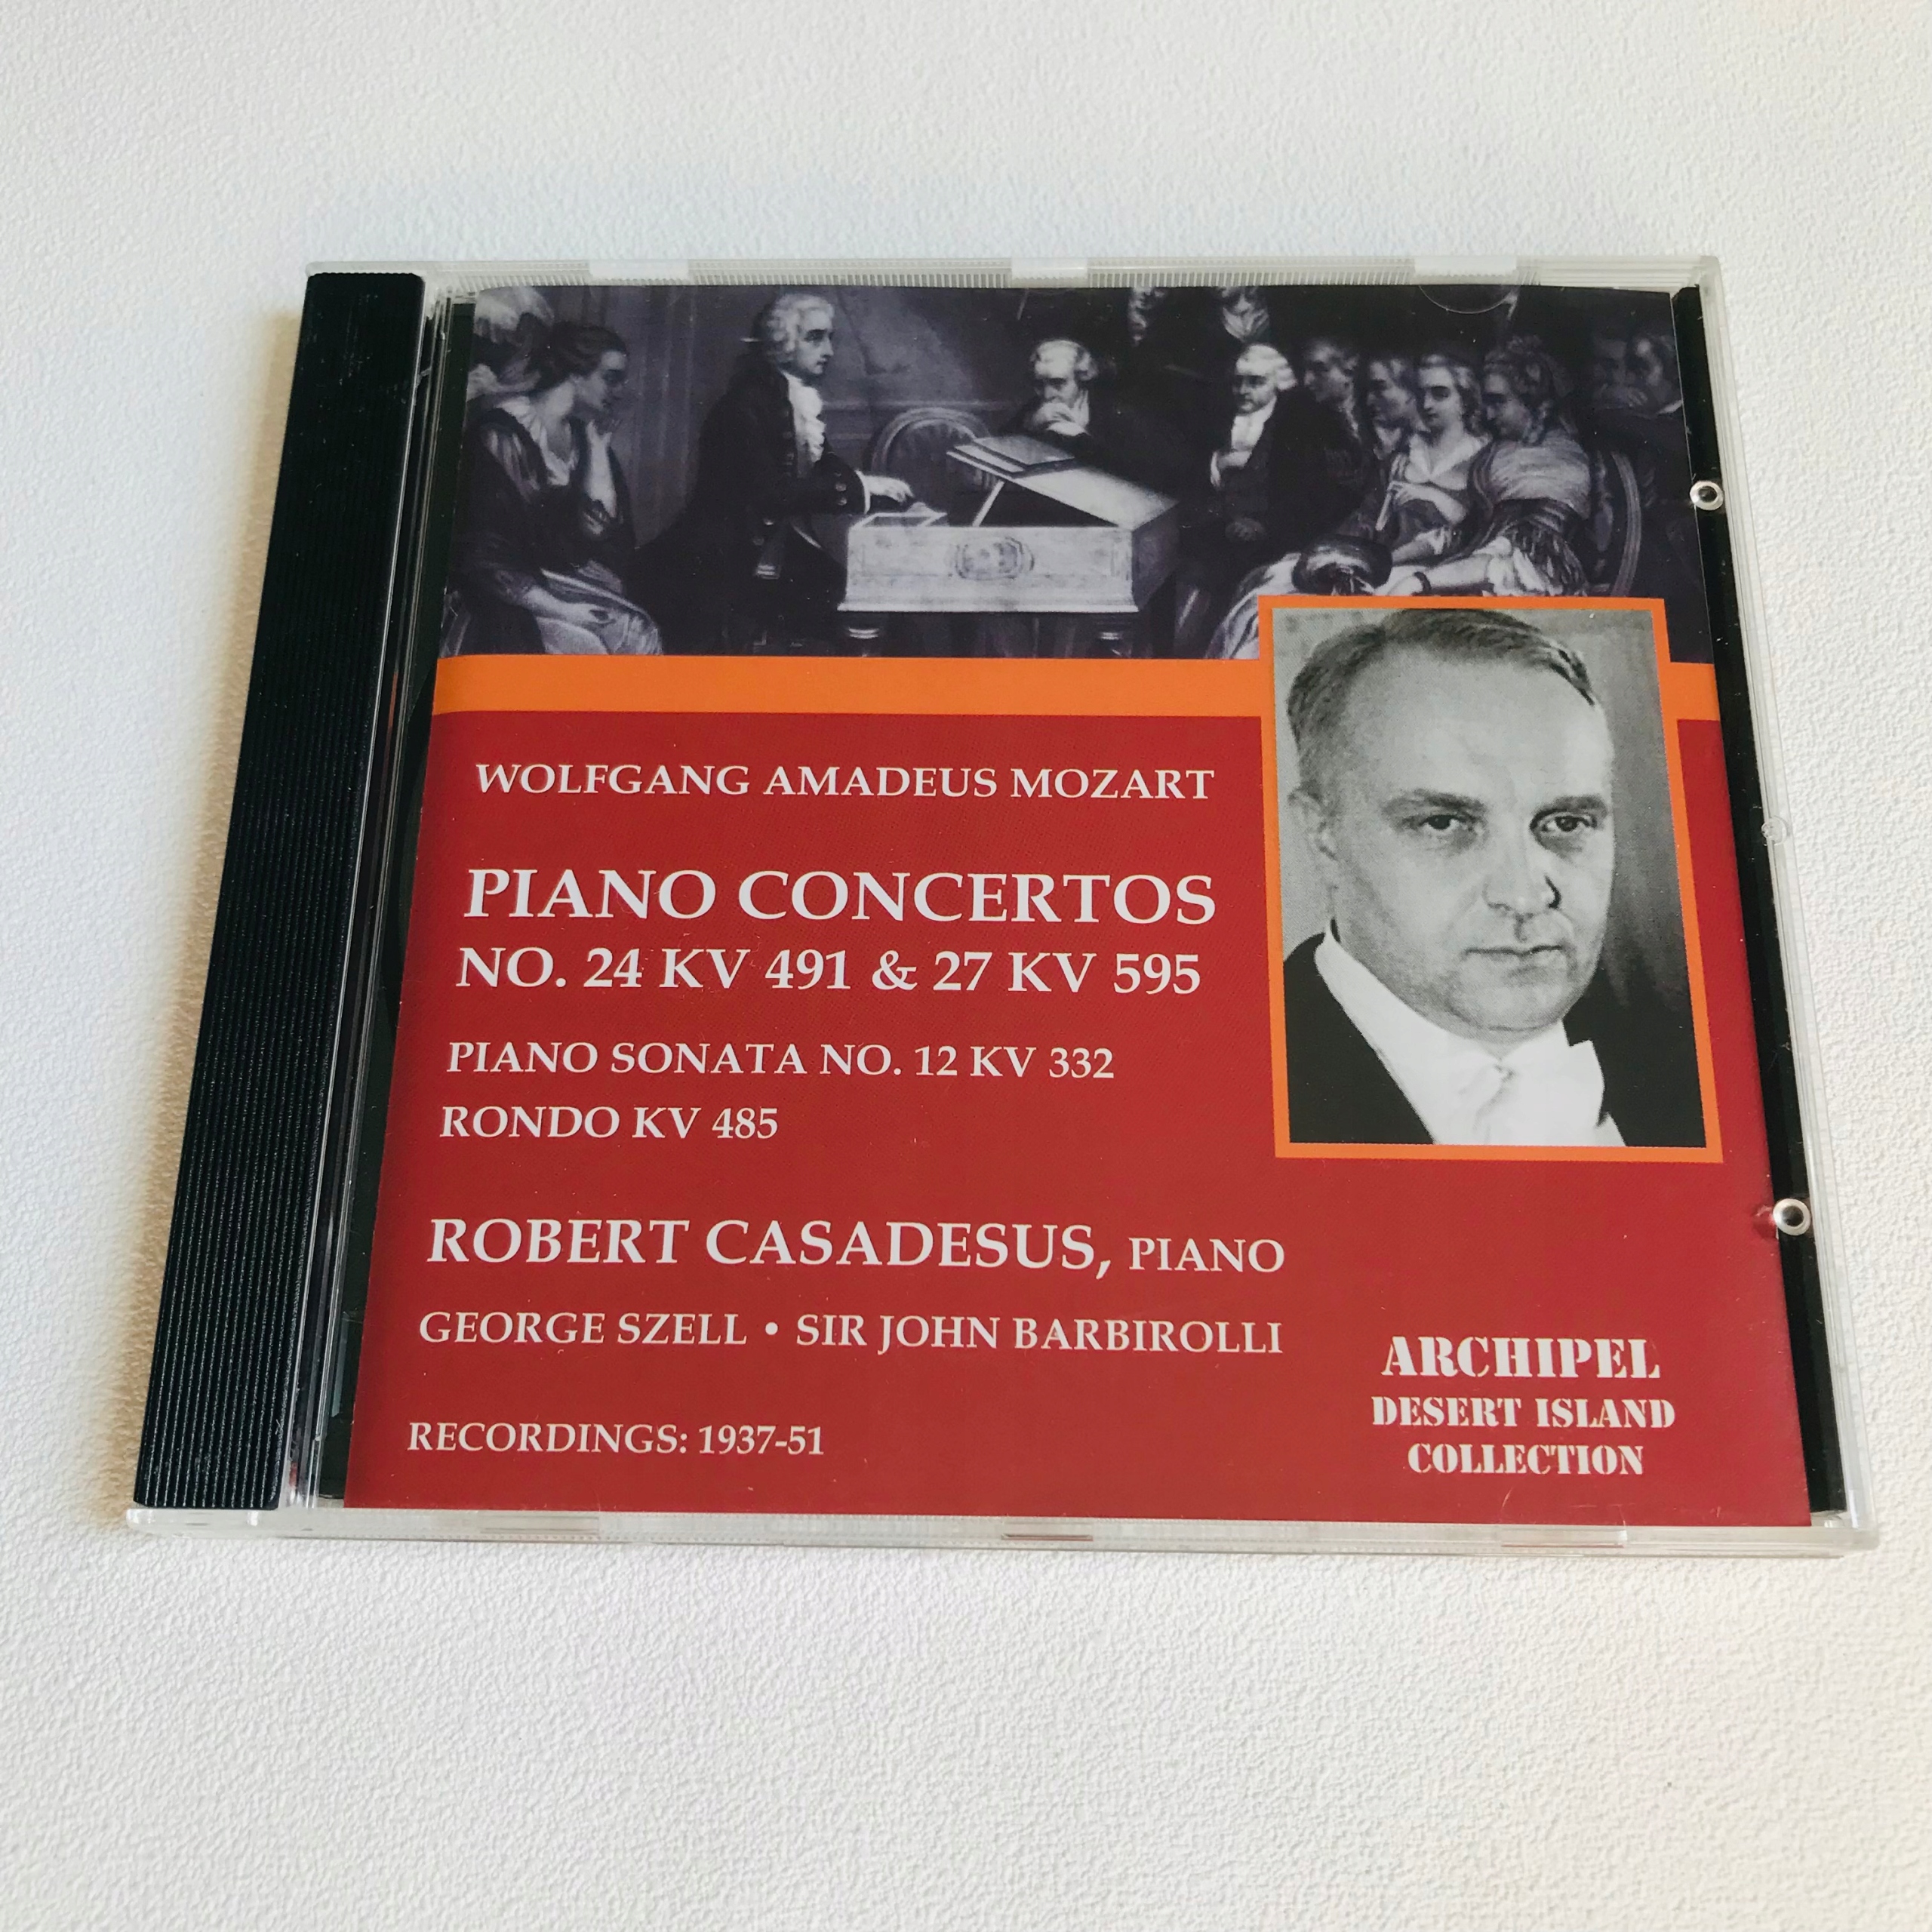 Concertos　w　Casadesus,　Sklepy,　Szell　14424539733　Opinie,　Ceny　Mozart:　Piano